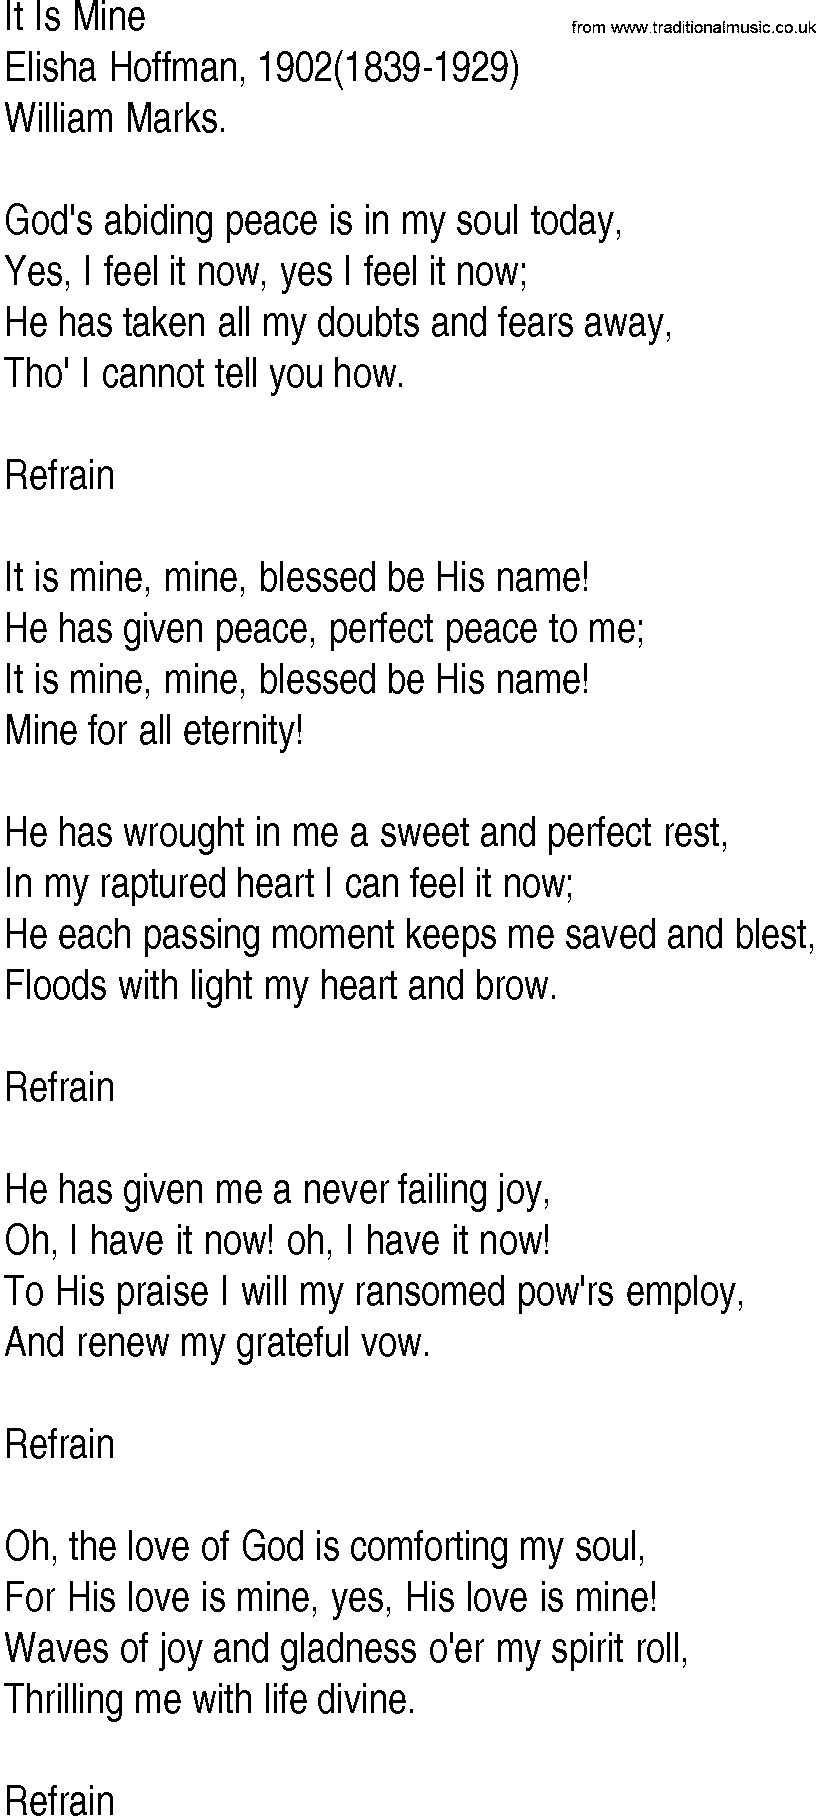 Hymn and Gospel Song: It Is Mine by Elisha Hoffman lyrics